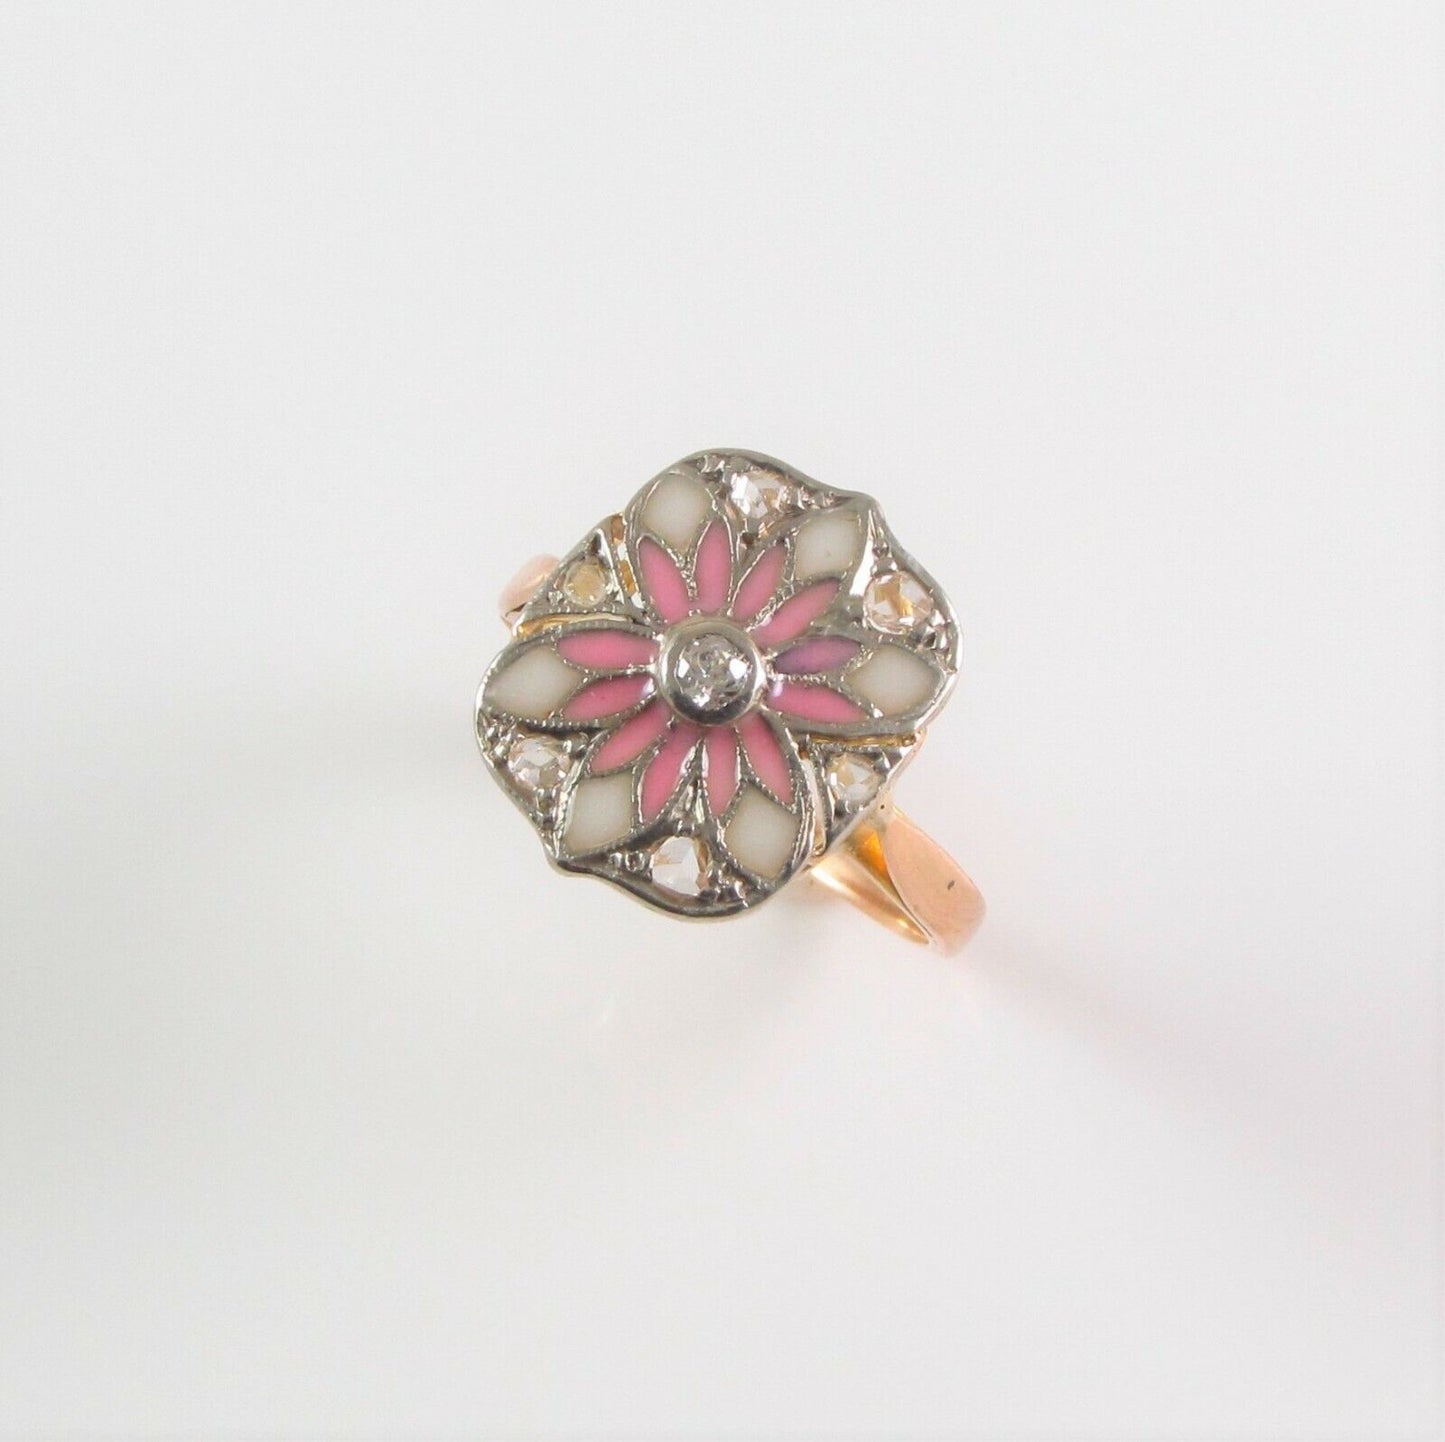 Ladies Antique 18k Gold & Platinum Topped Enamel Diamond Flower Ring Size 5.75